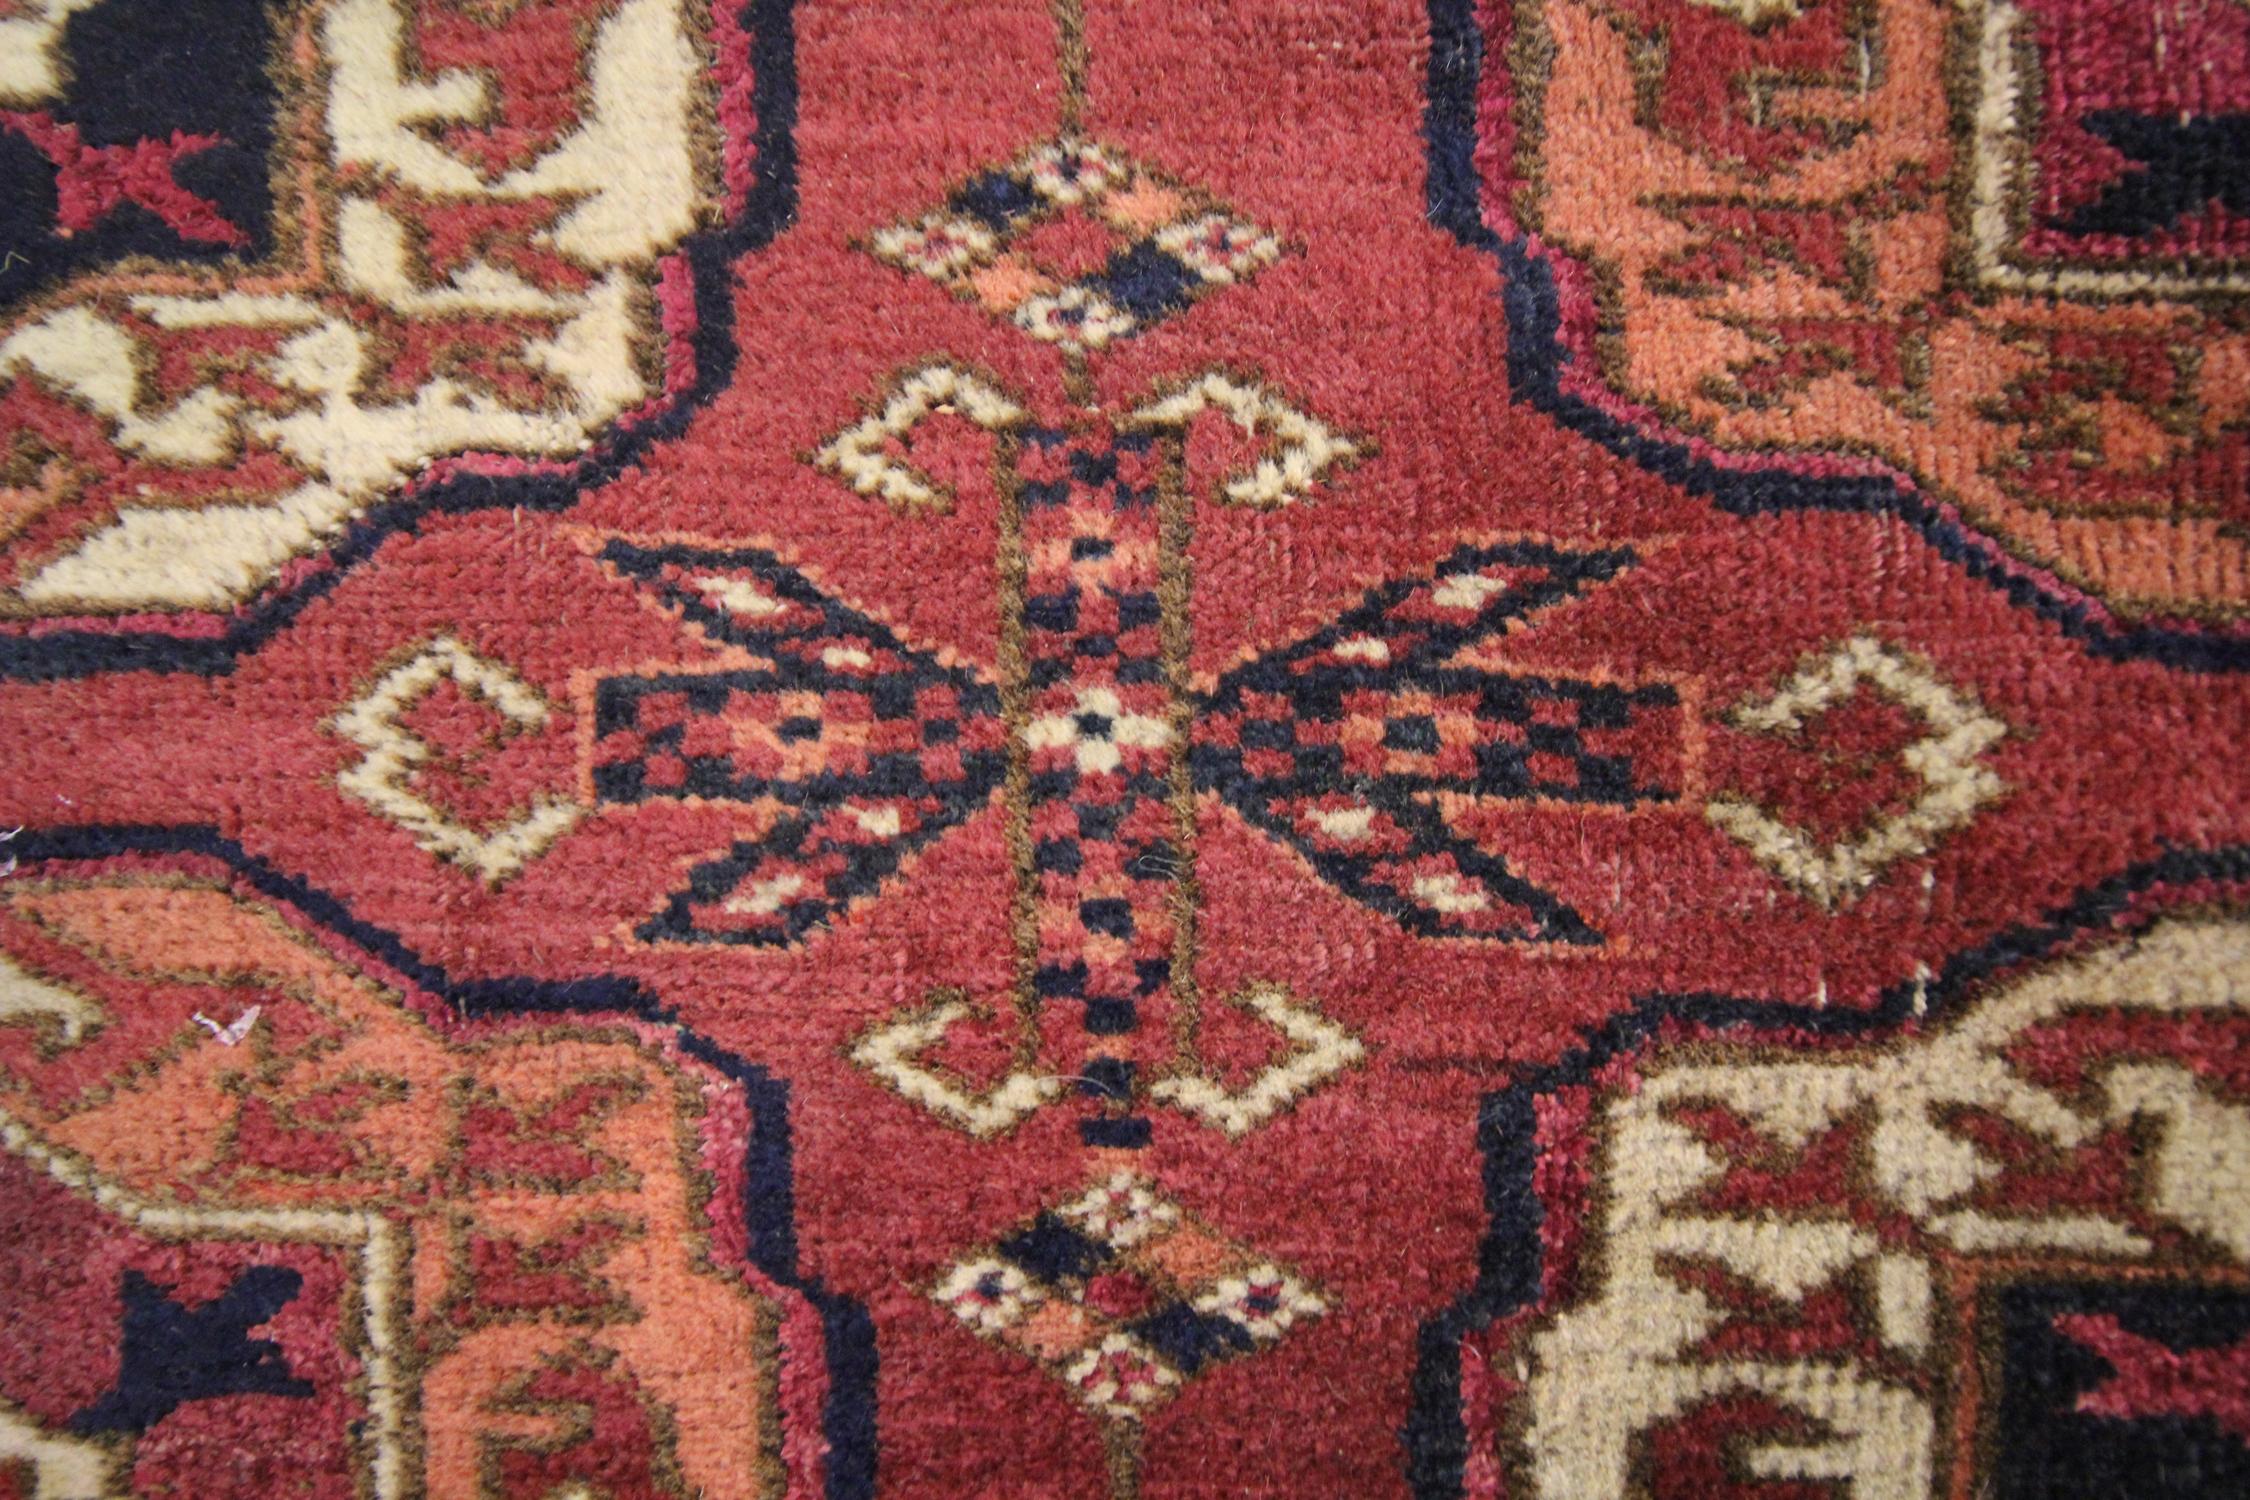 Early 20th Century Turkmen Area Rug Bokhara Carpet Large Antique Handwoven Carpet